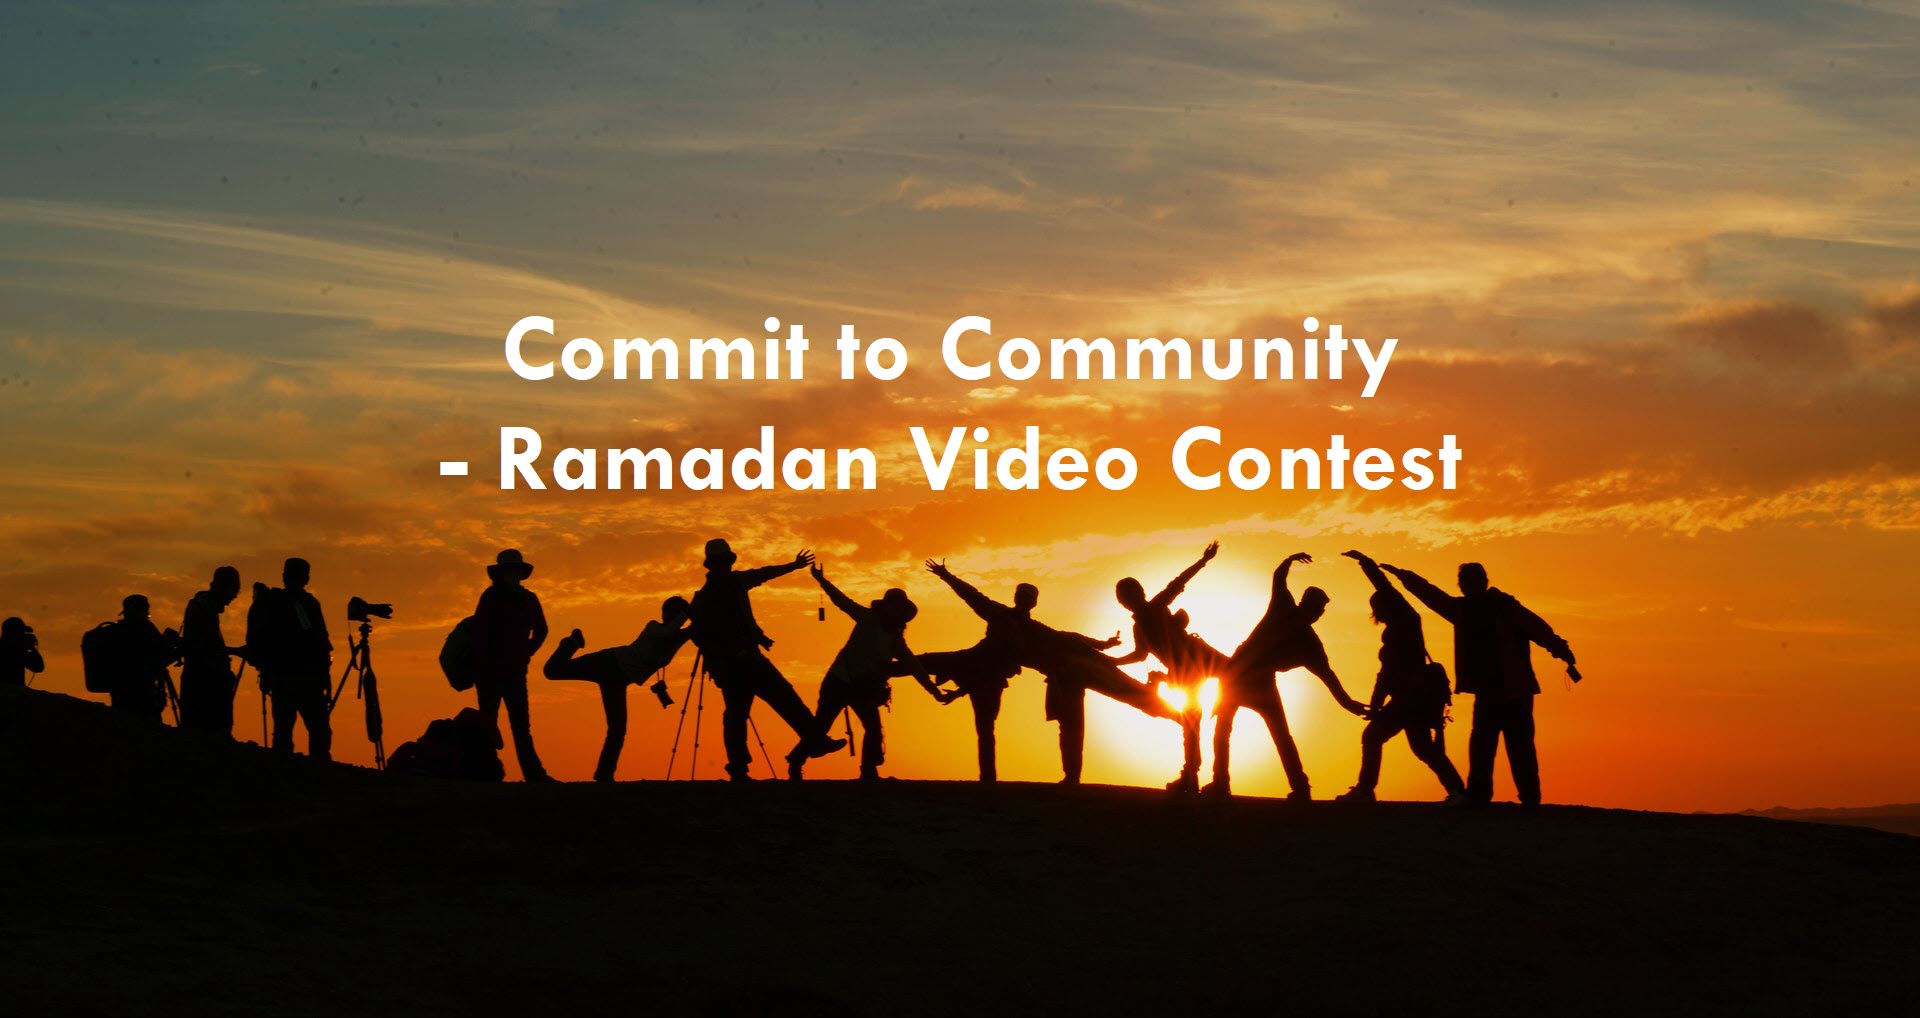 Commit to Community - Ramadan Video Contest